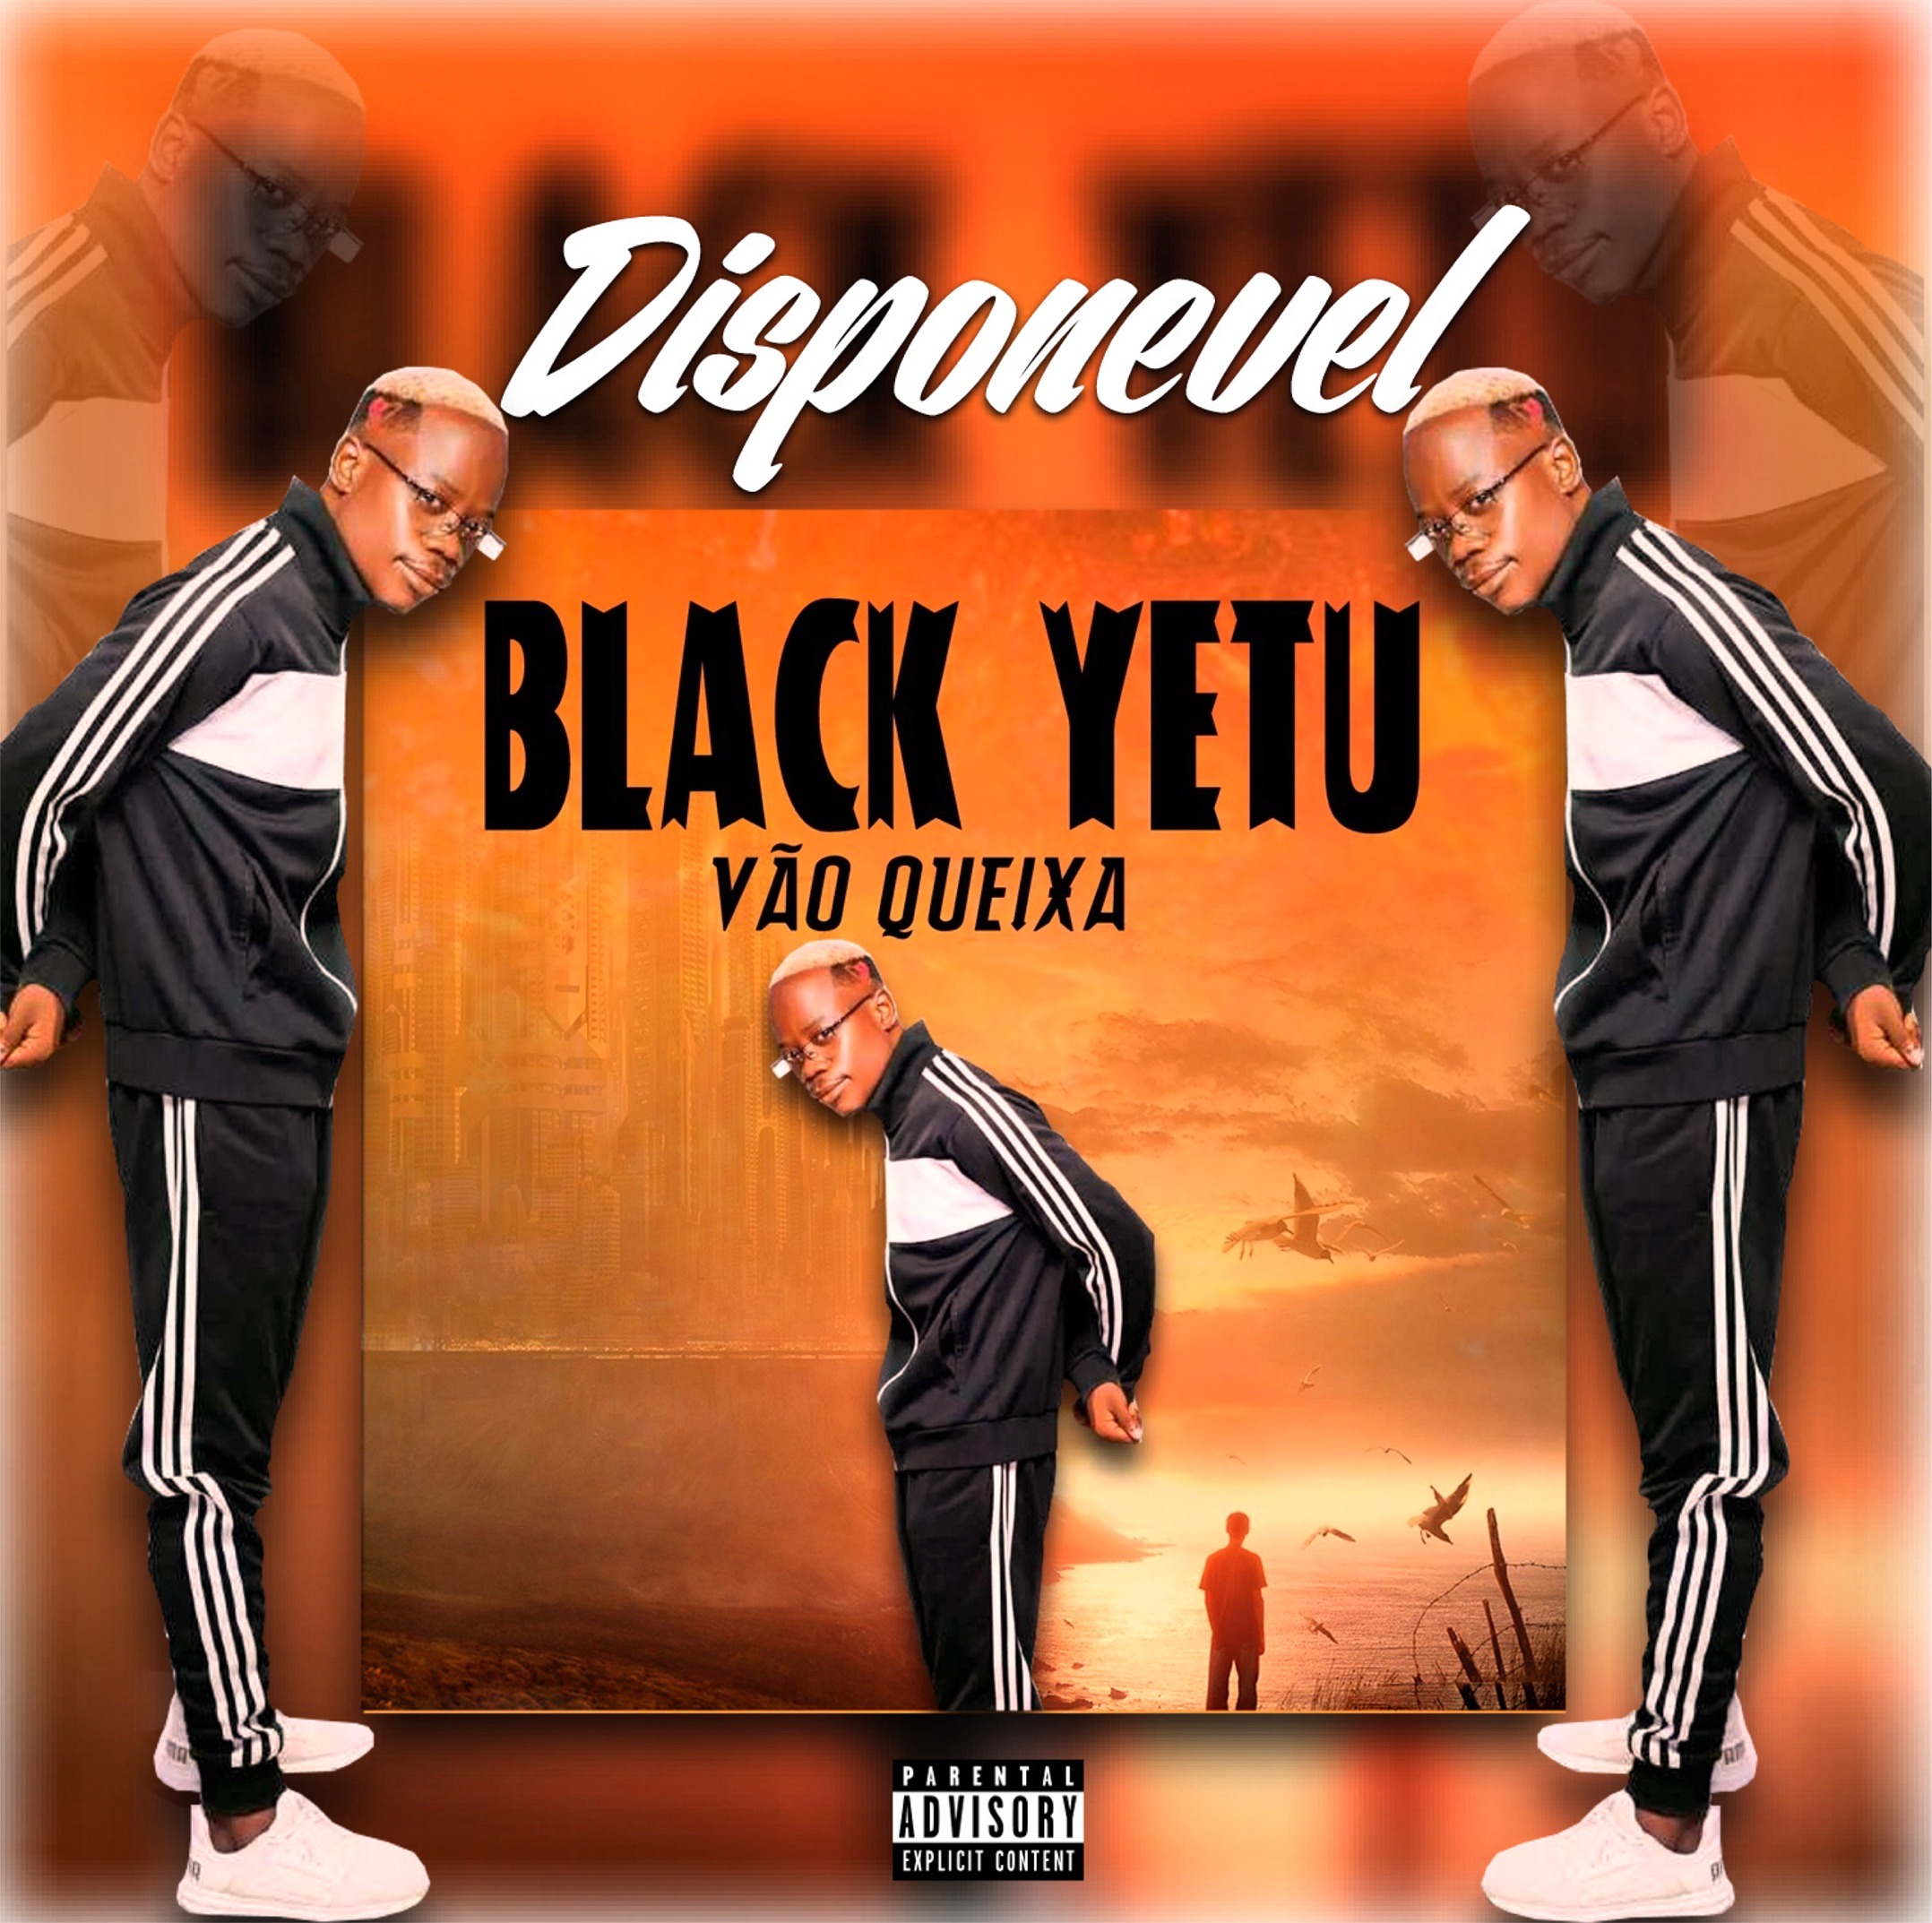 Black yetu - Vao Quexar